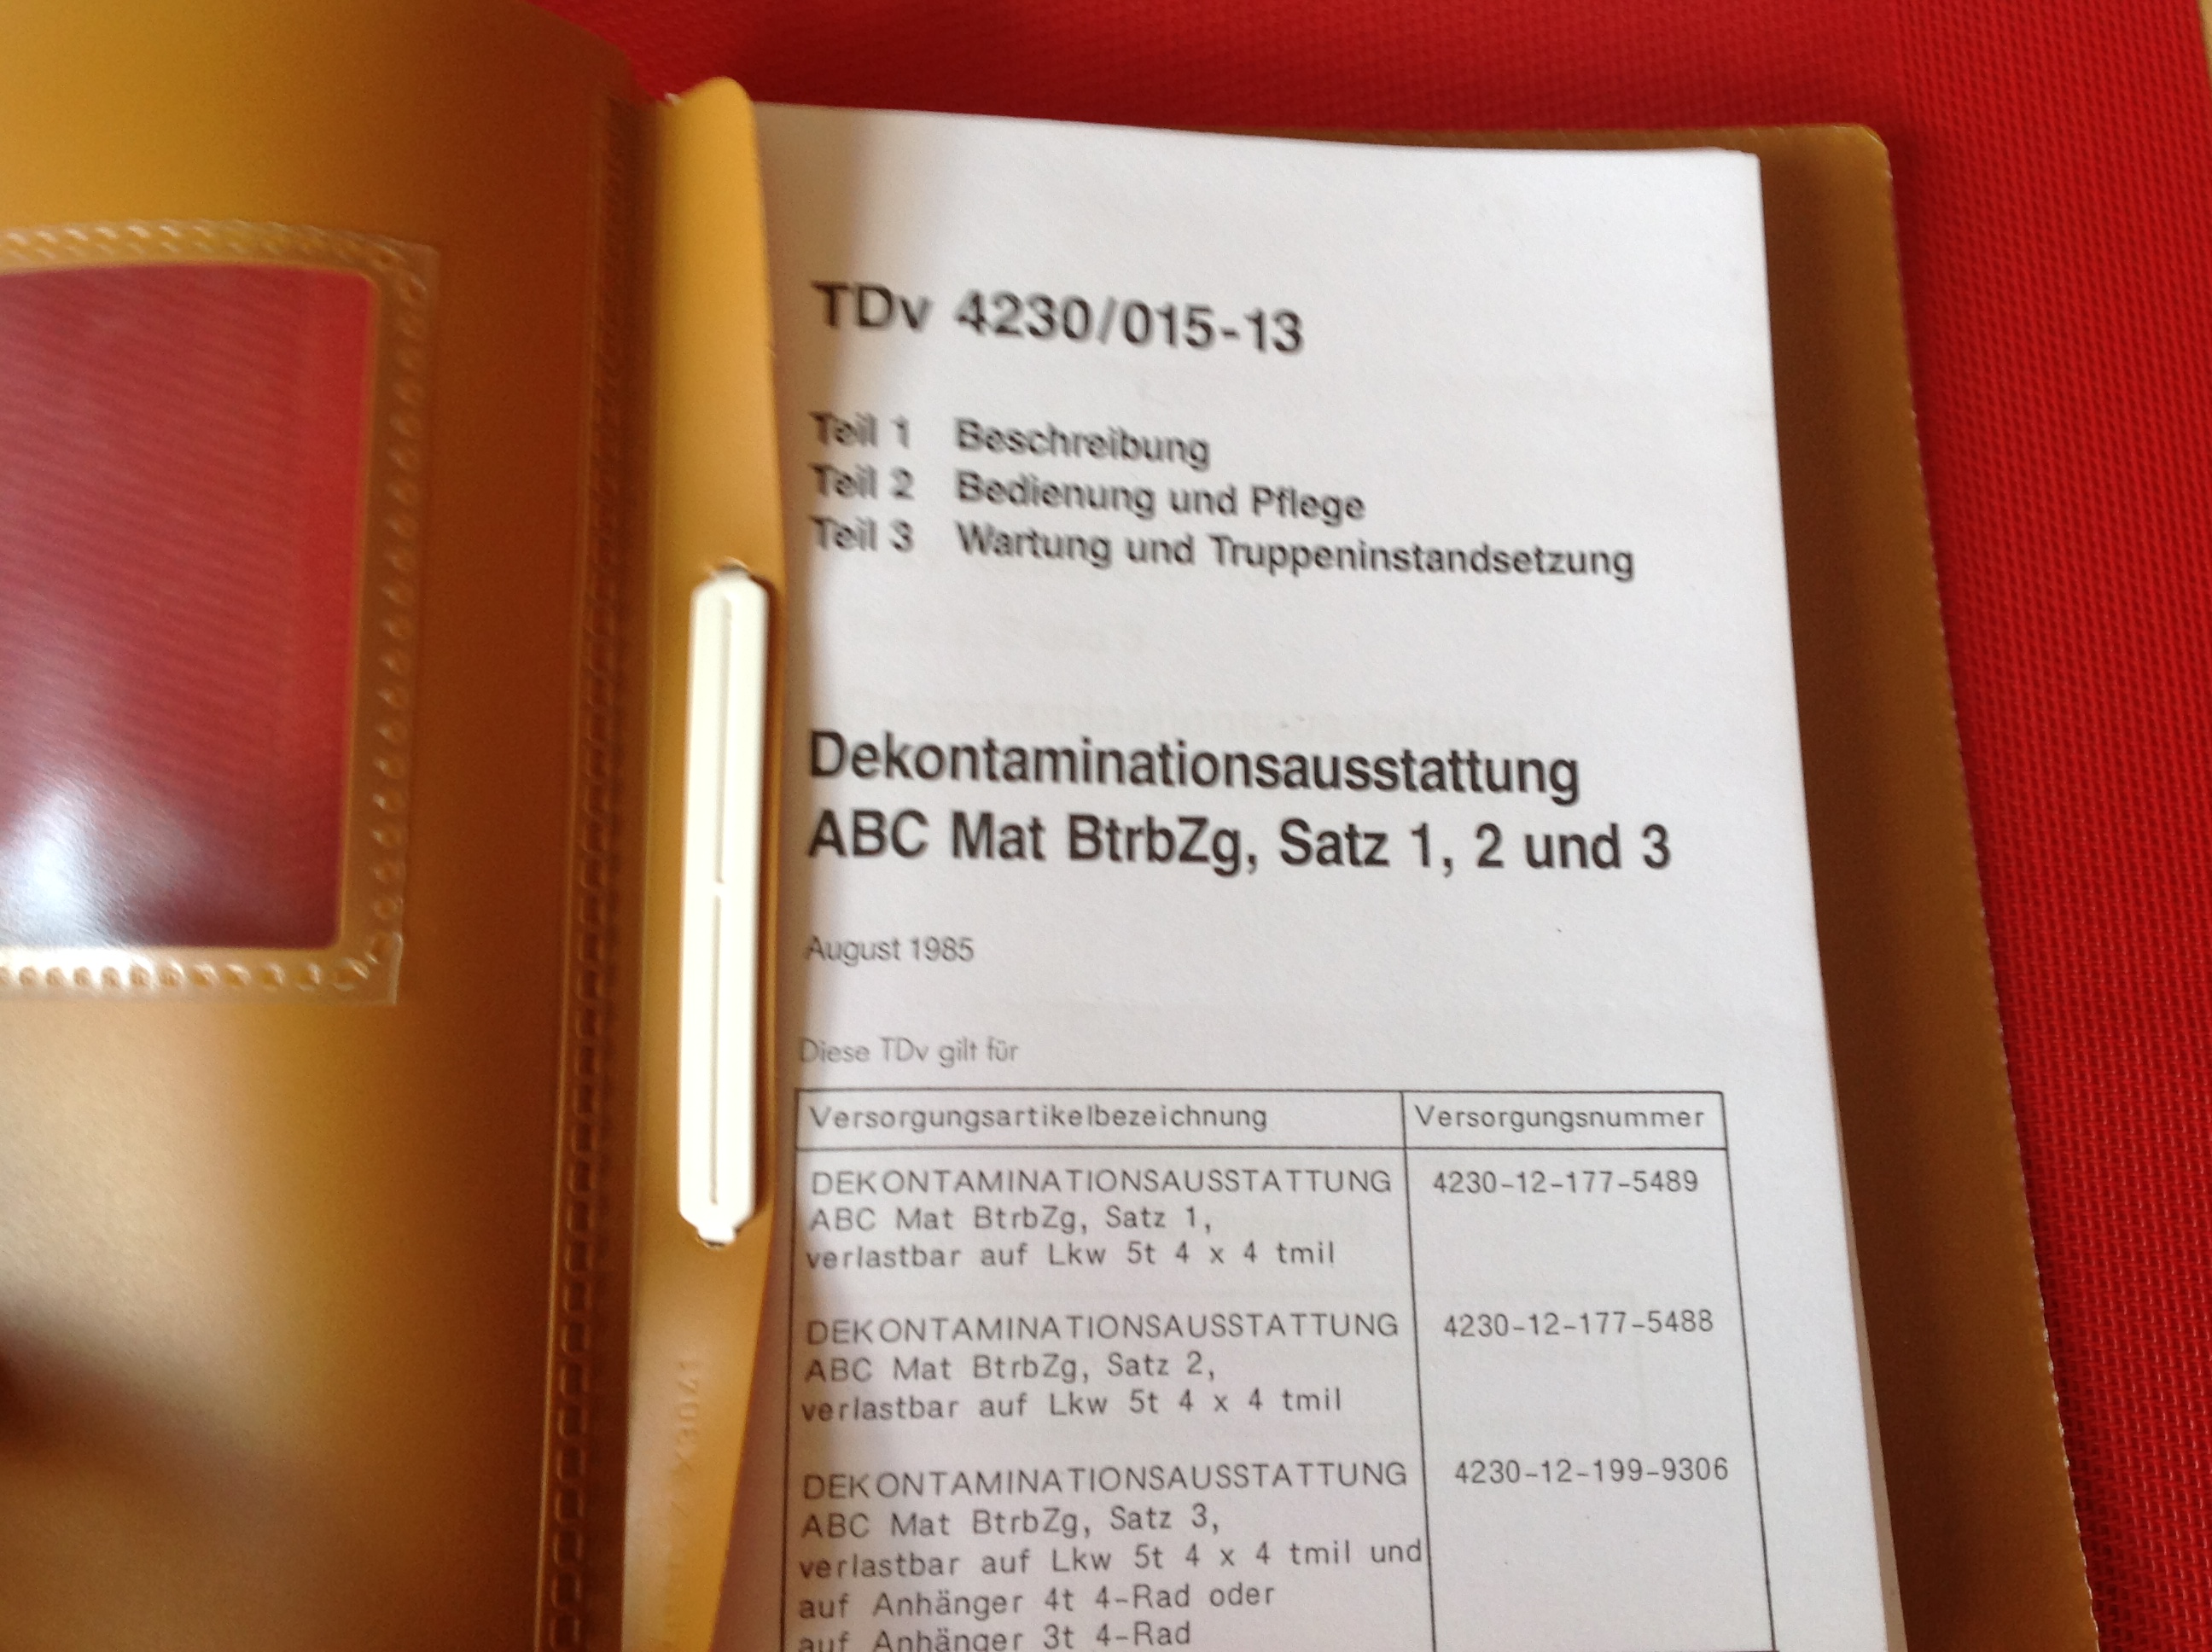 Dekontaminationsausstattung ABC Mat BtrbZg, Satz 1, 2 und 3, TDv 4230/015-13